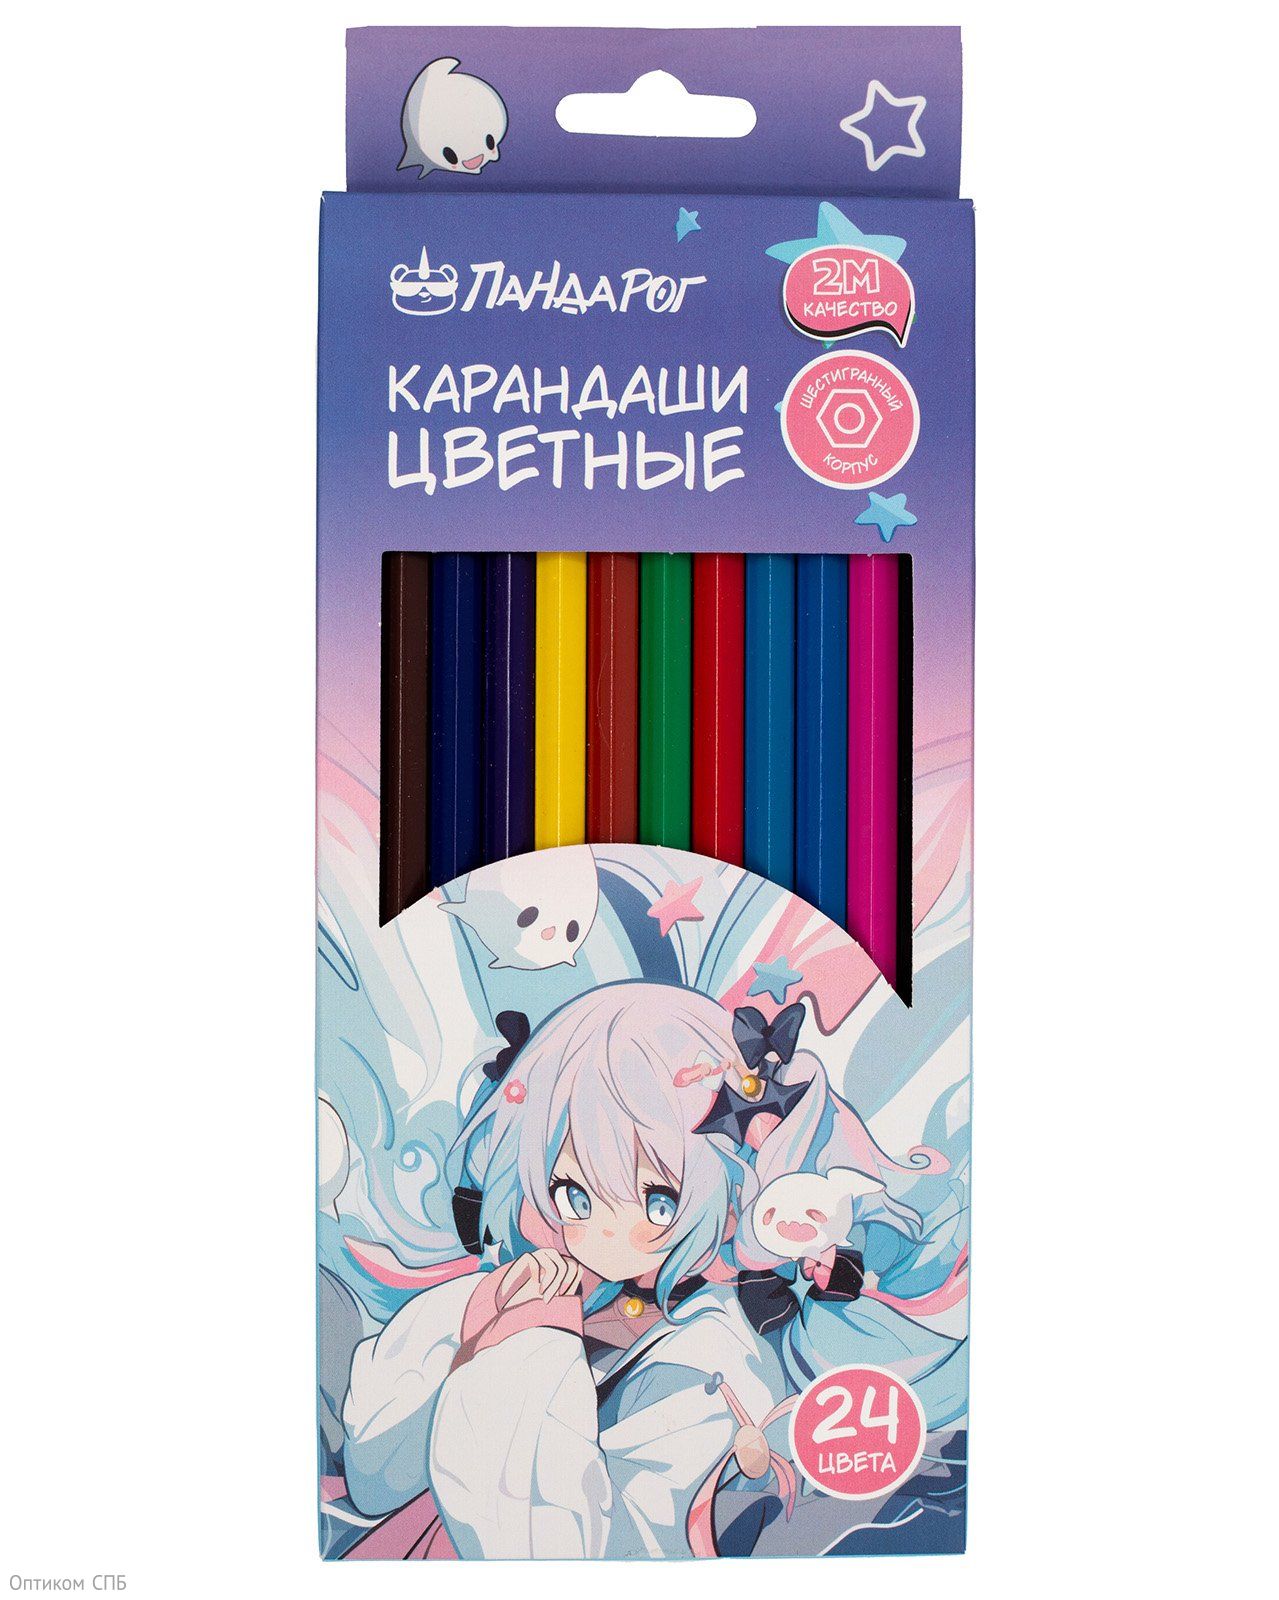 Карандаши цветные ПандаРог Anime Girl, 24 цвета, пластиковые, шестигранные